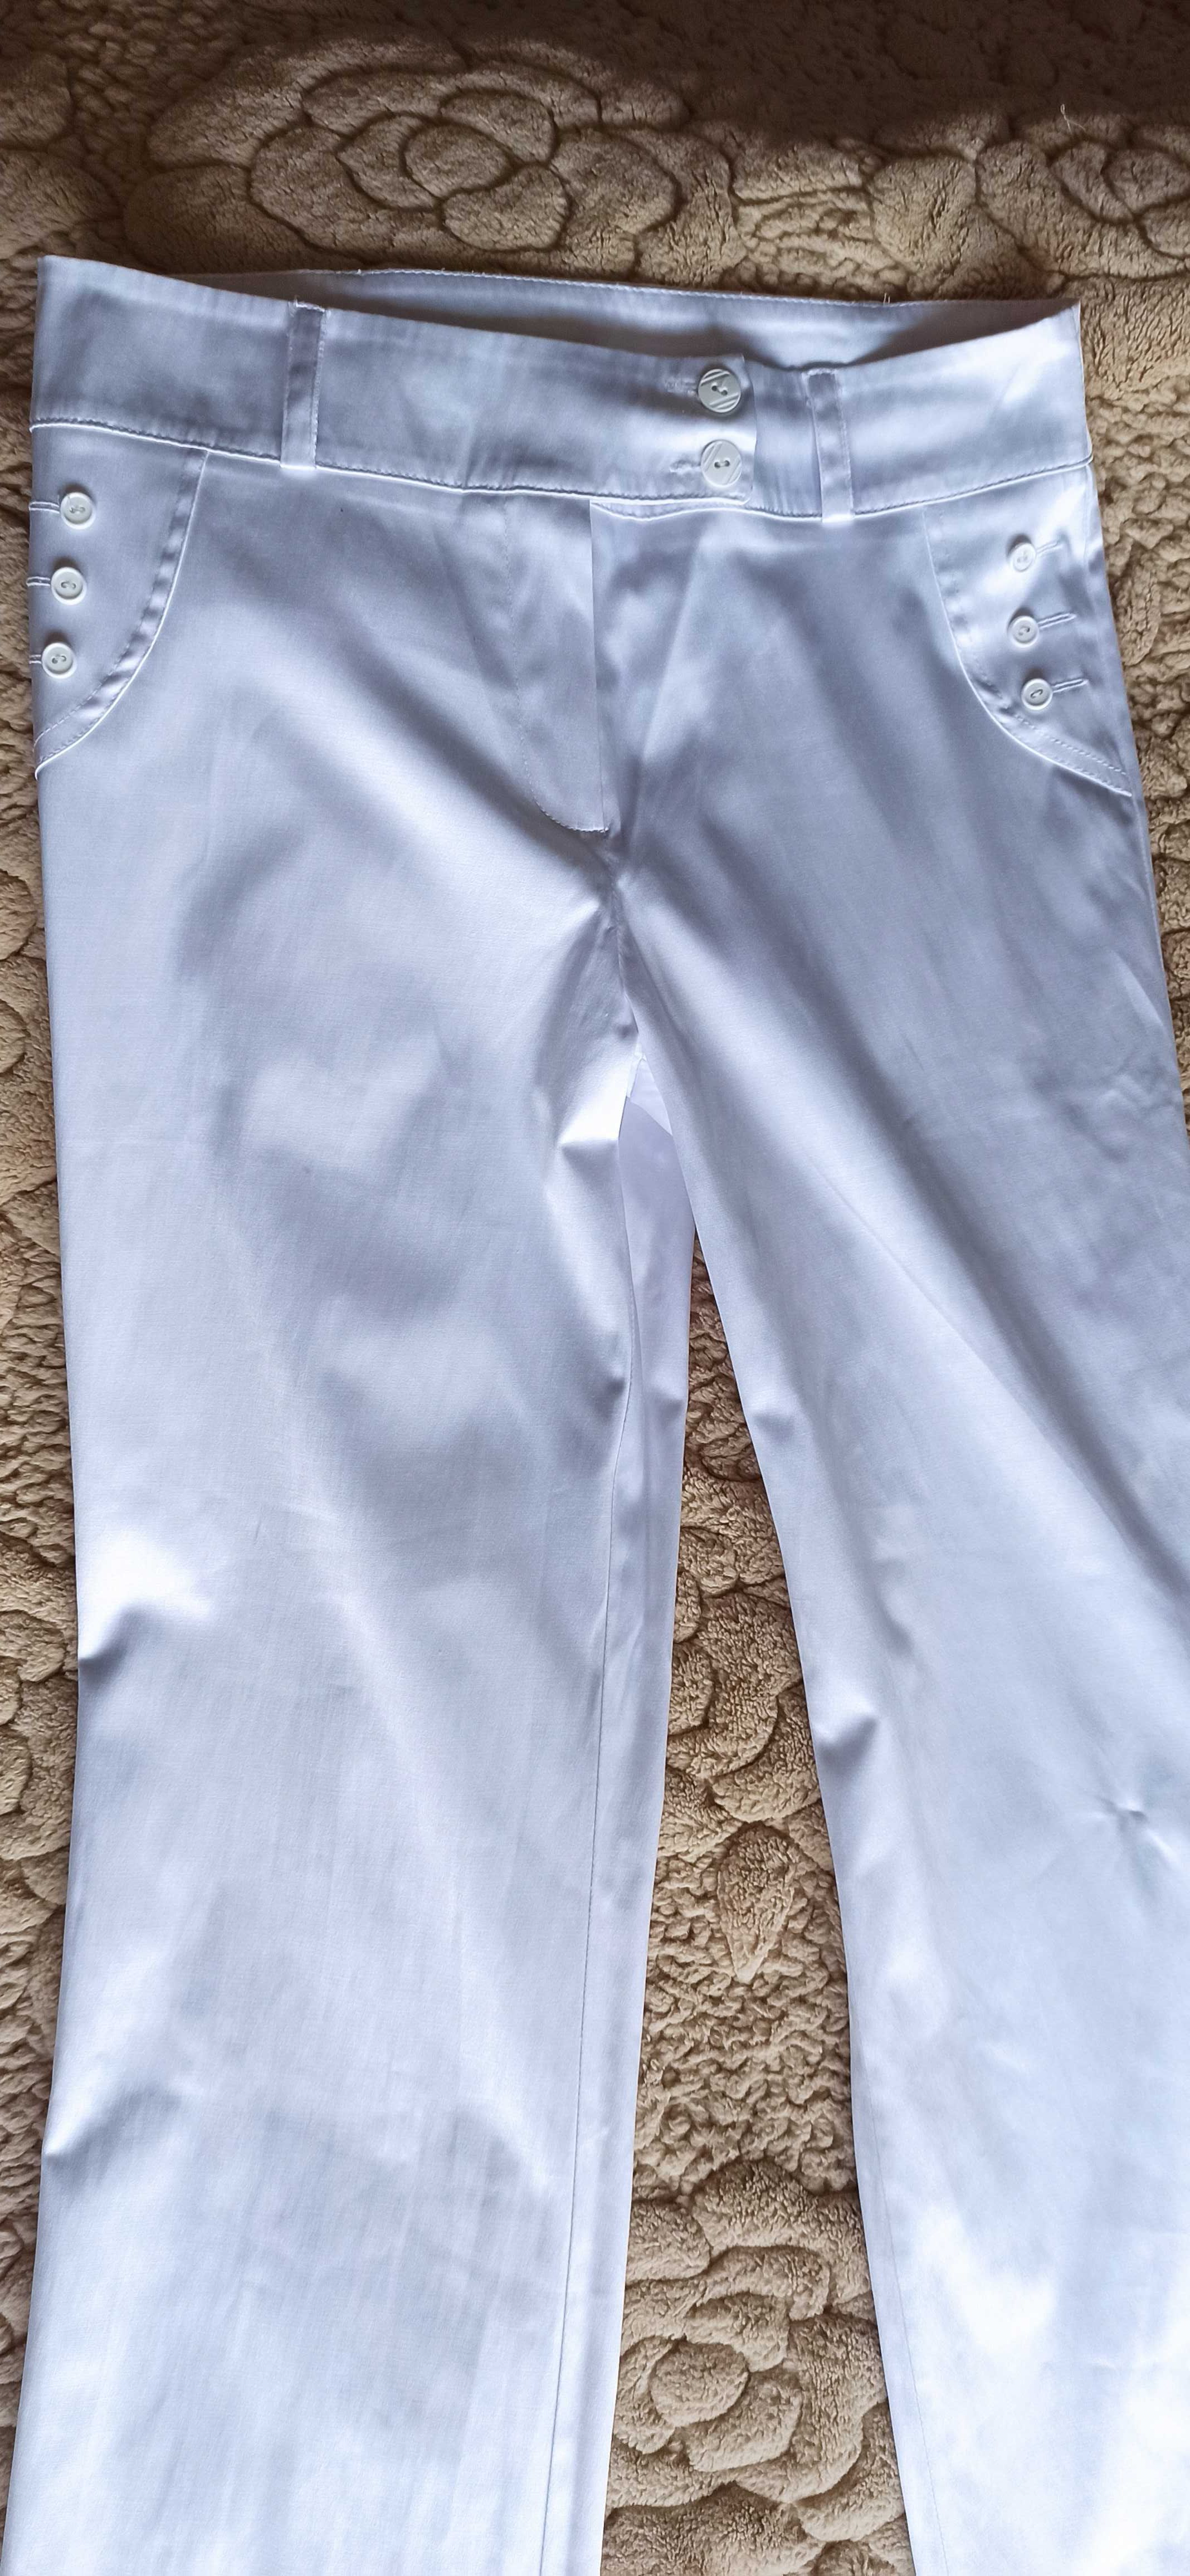 Spodnie białe na lato - roz. 38